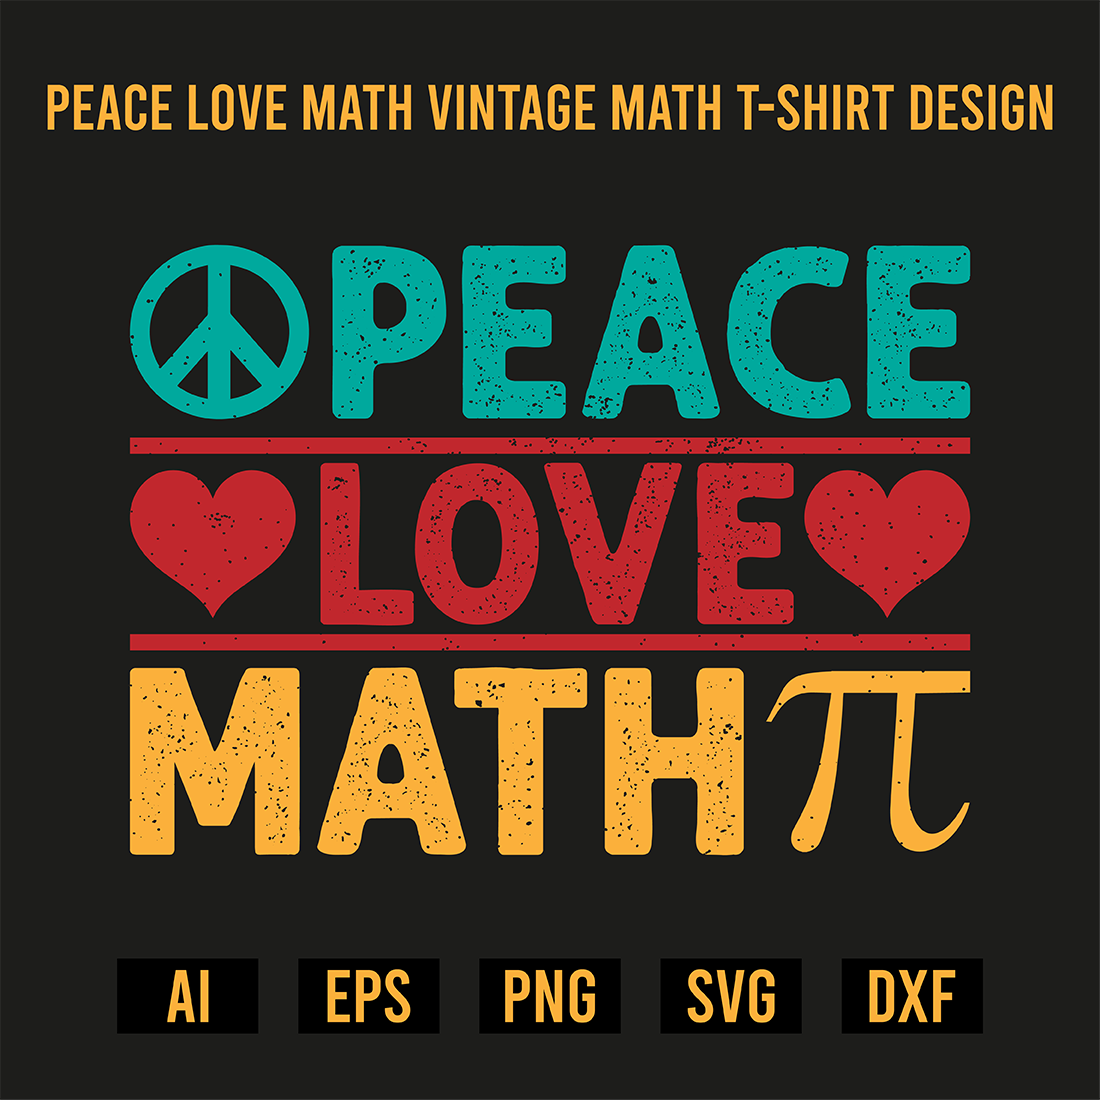 Peace Love Math Vintage Math T-Shirt Design cover image.